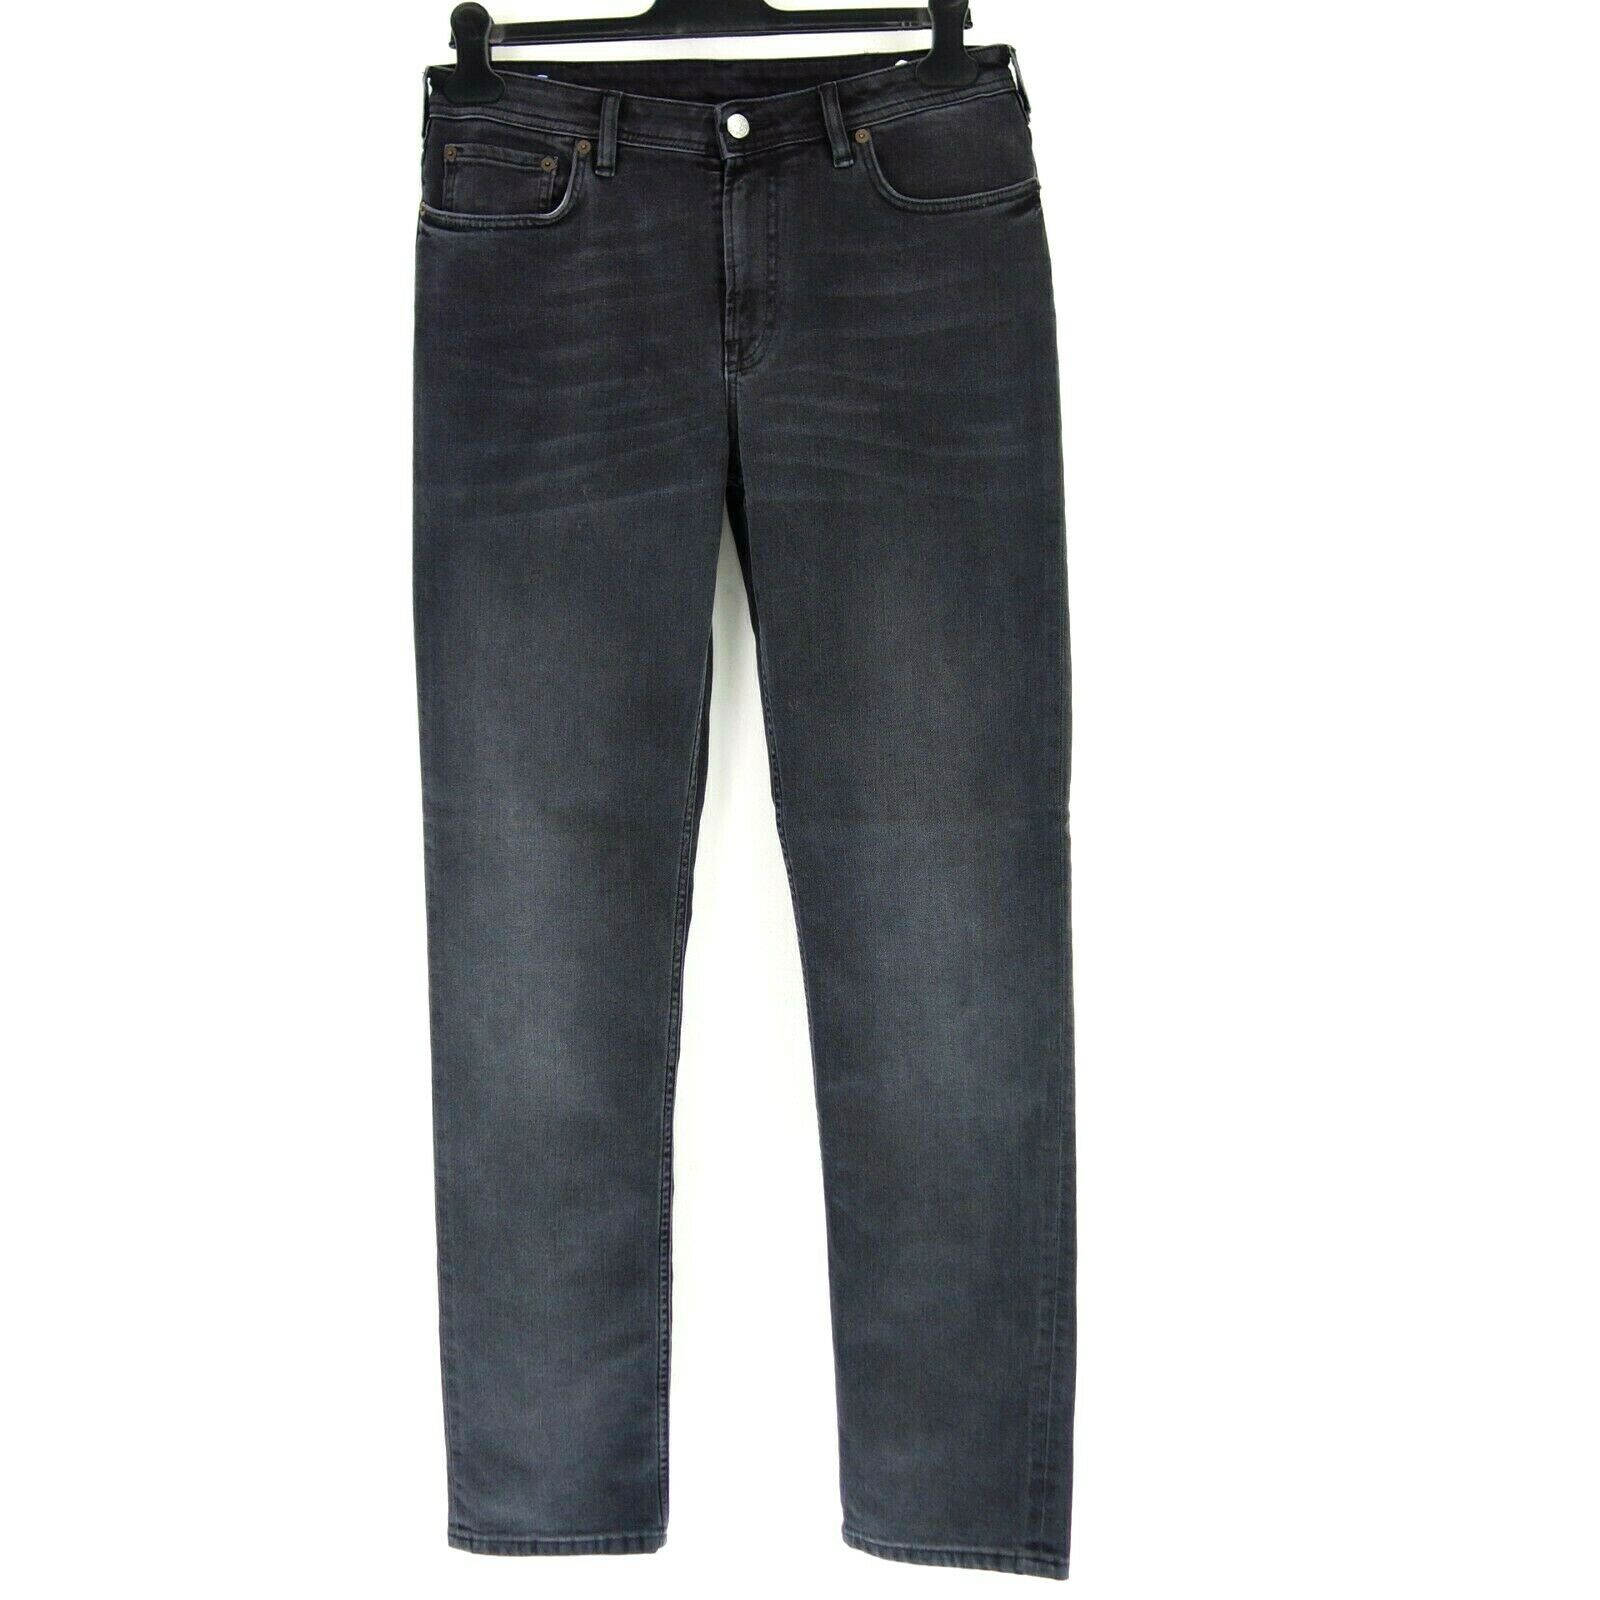 Acne Studios Damen Jeans Hose Jeanshose Straight South Used Schwarz Mid Waist - W32